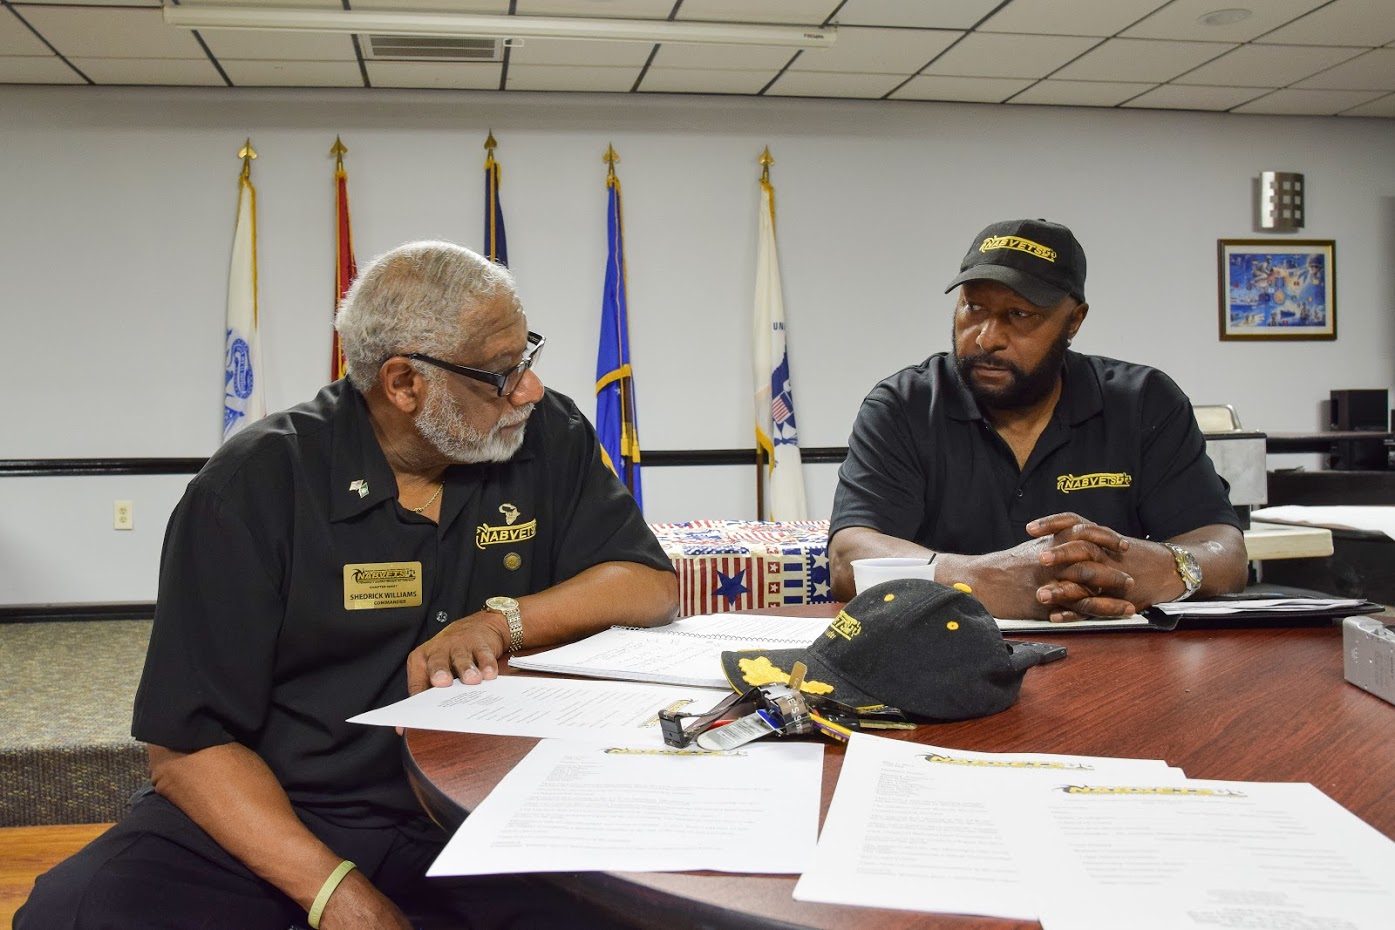 The National Association for Black Veterans (NABVETS)